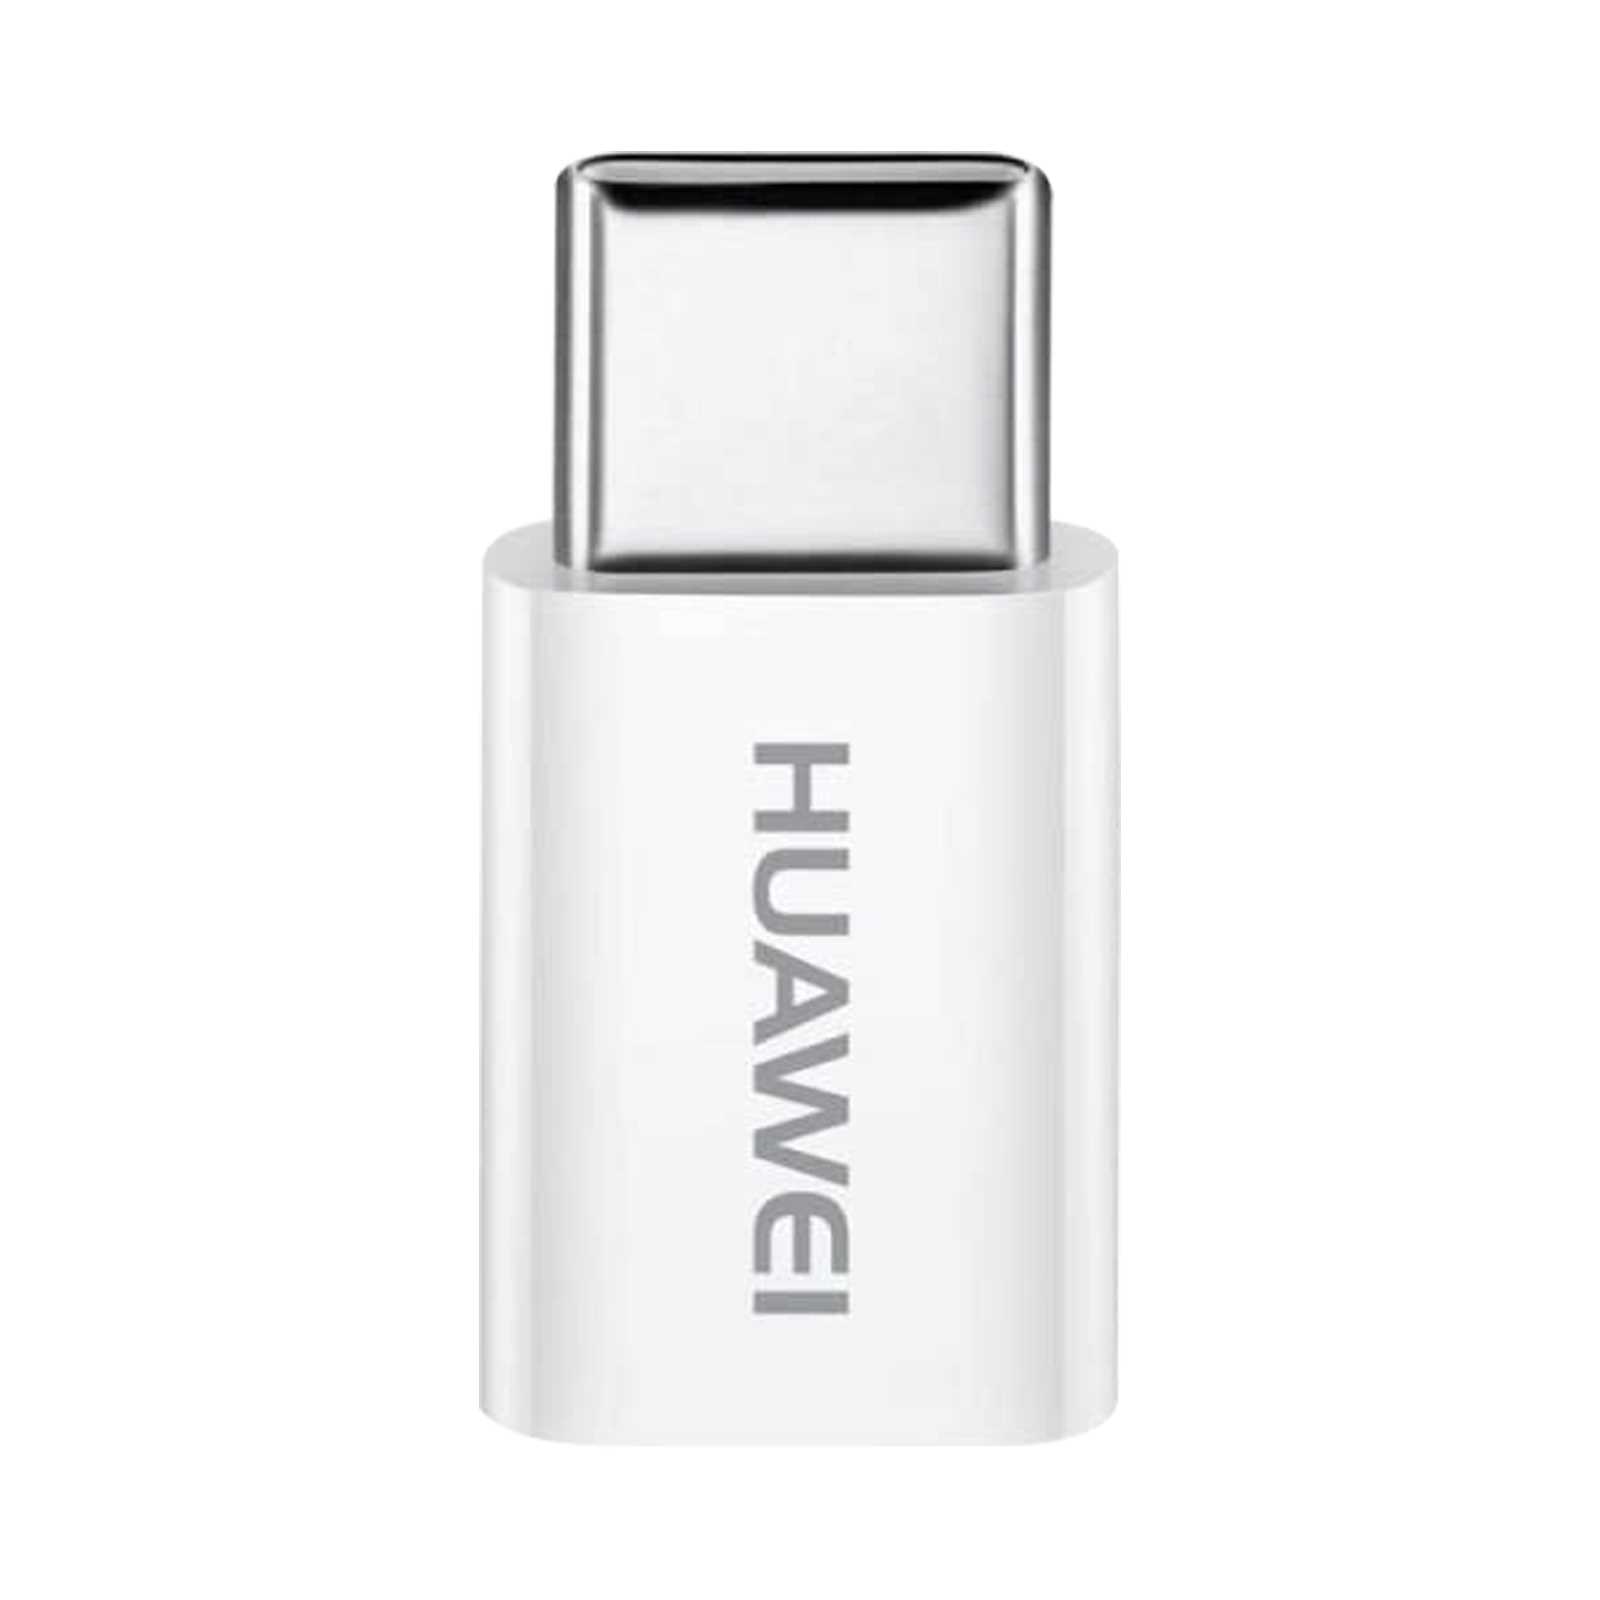 HUAWEI USB Type C Adapter